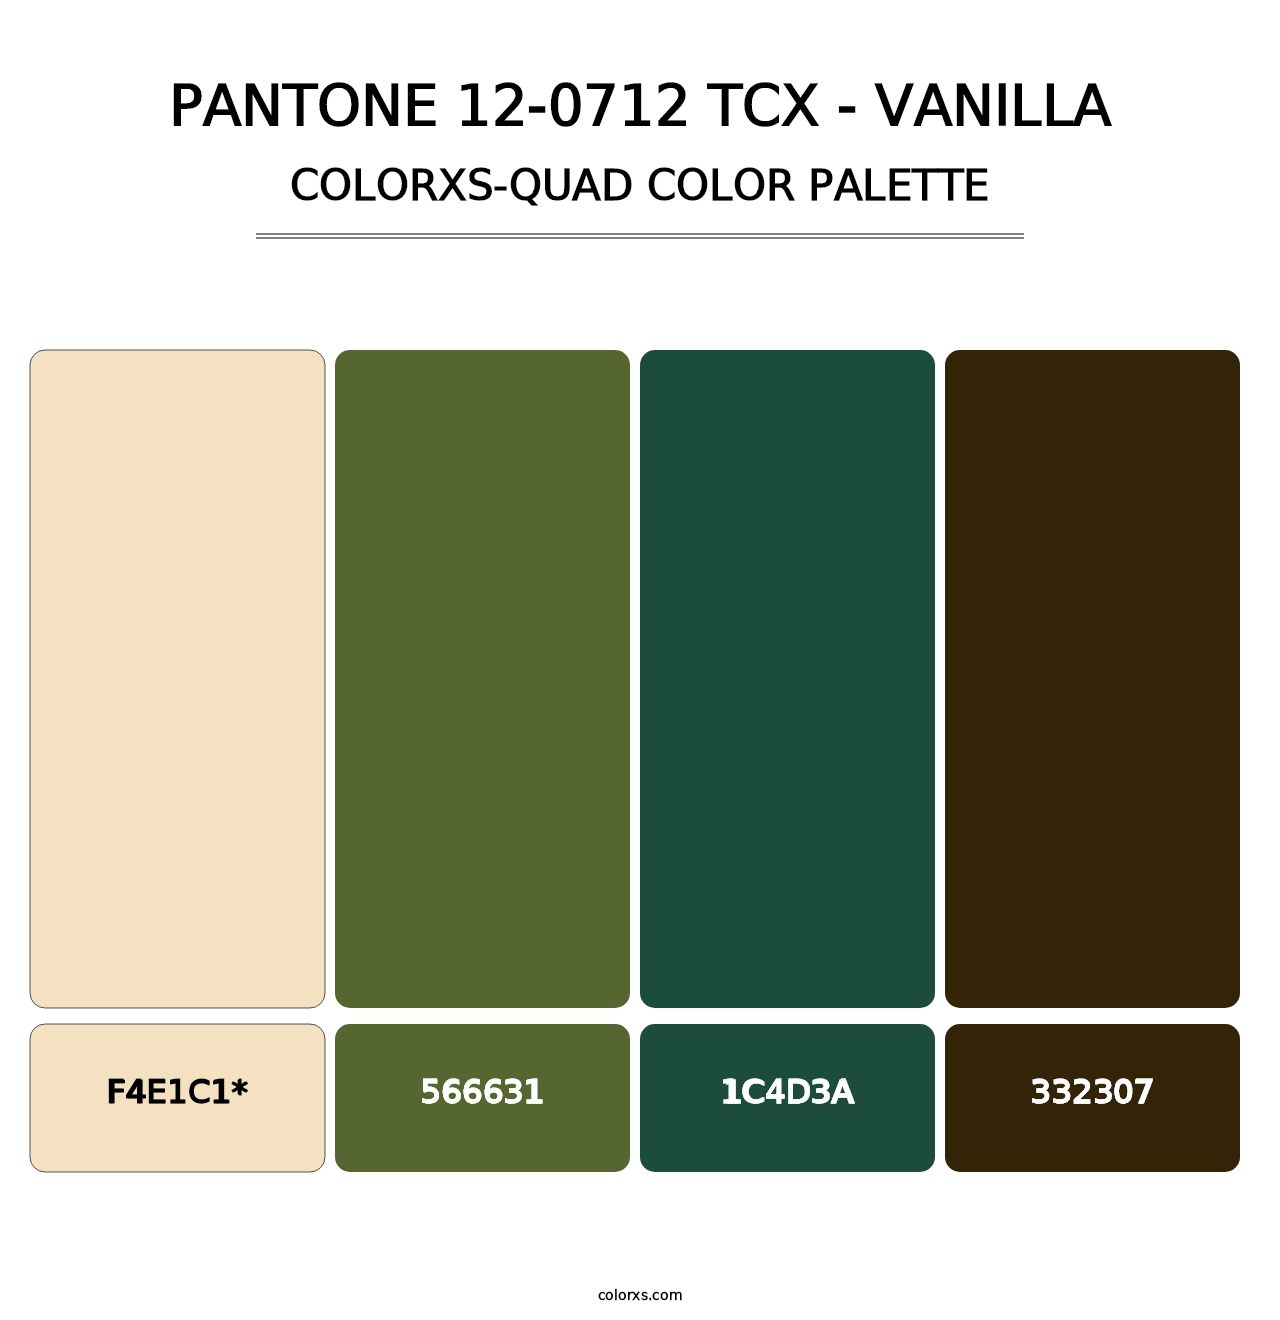 PANTONE 12-0712 TCX - Vanilla - Colorxs Quad Palette